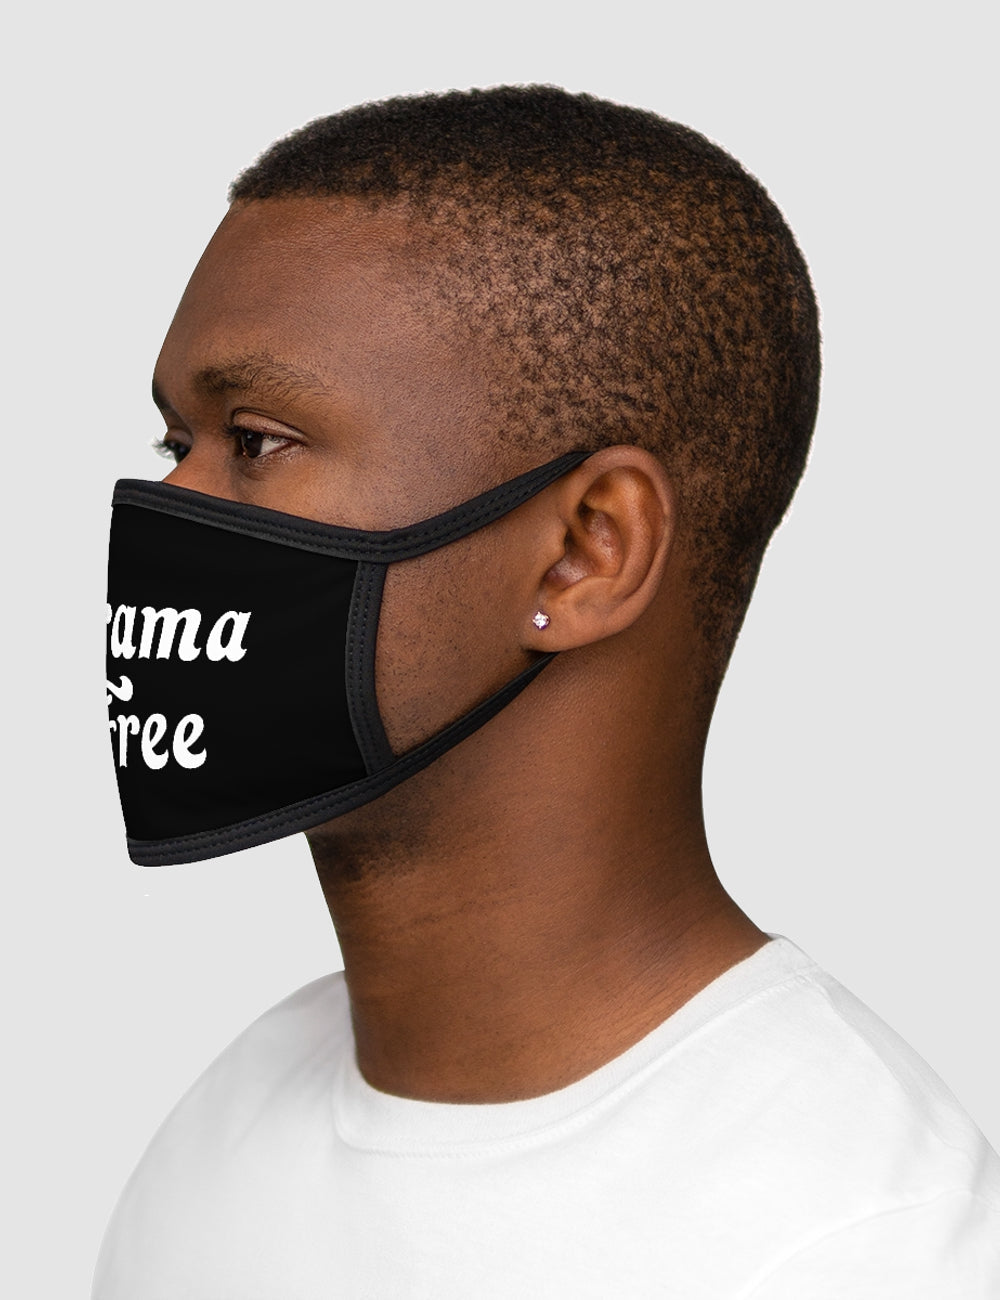 Drama Free | Mixed Fabric Face Mask OniTakai